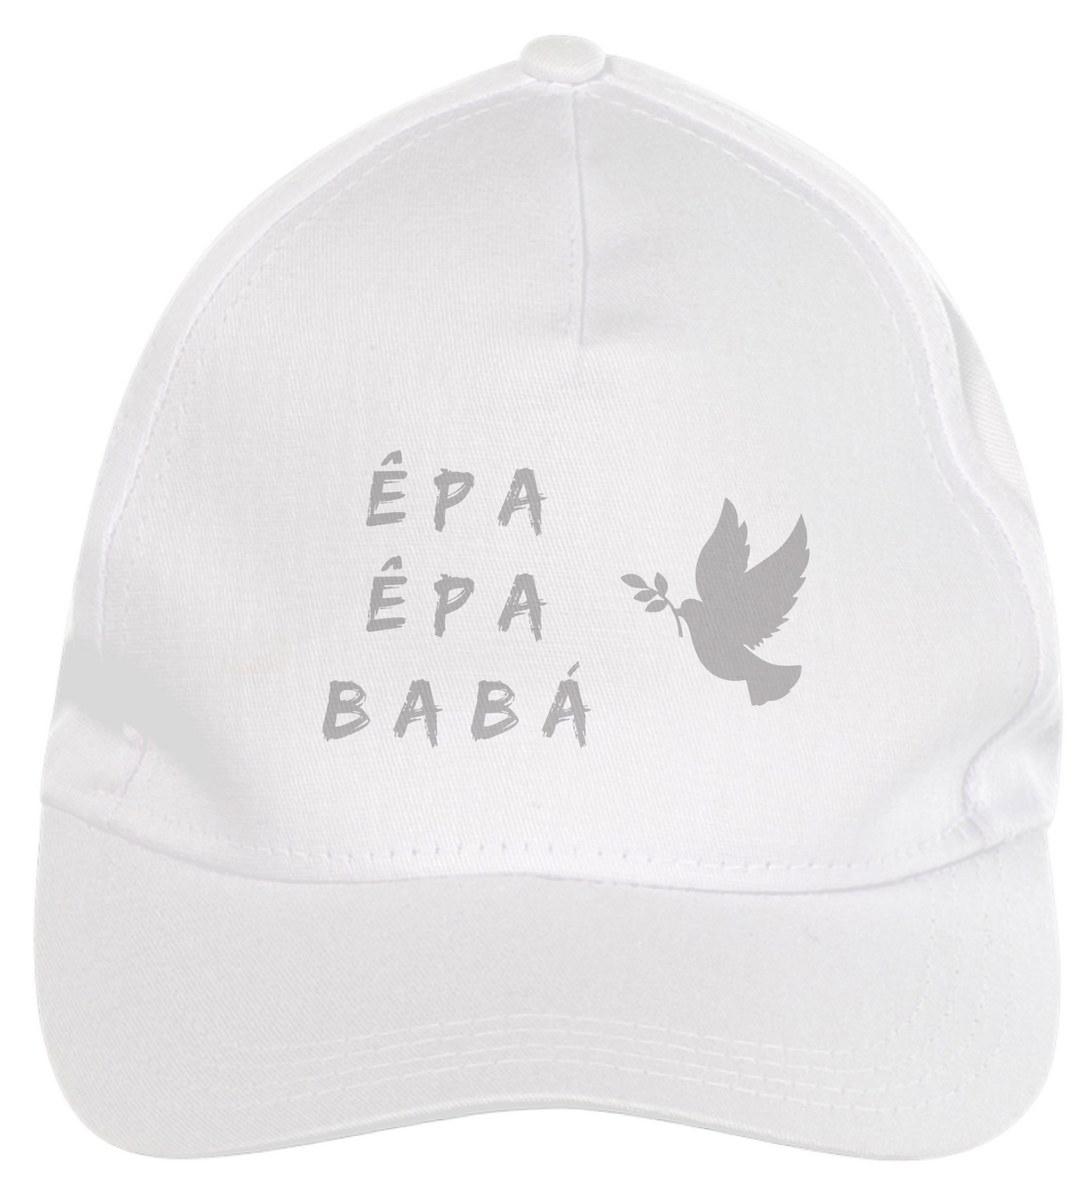 Nome do produto: Boné Òrìsànlá - Saudação Epa Epa Bàbá 